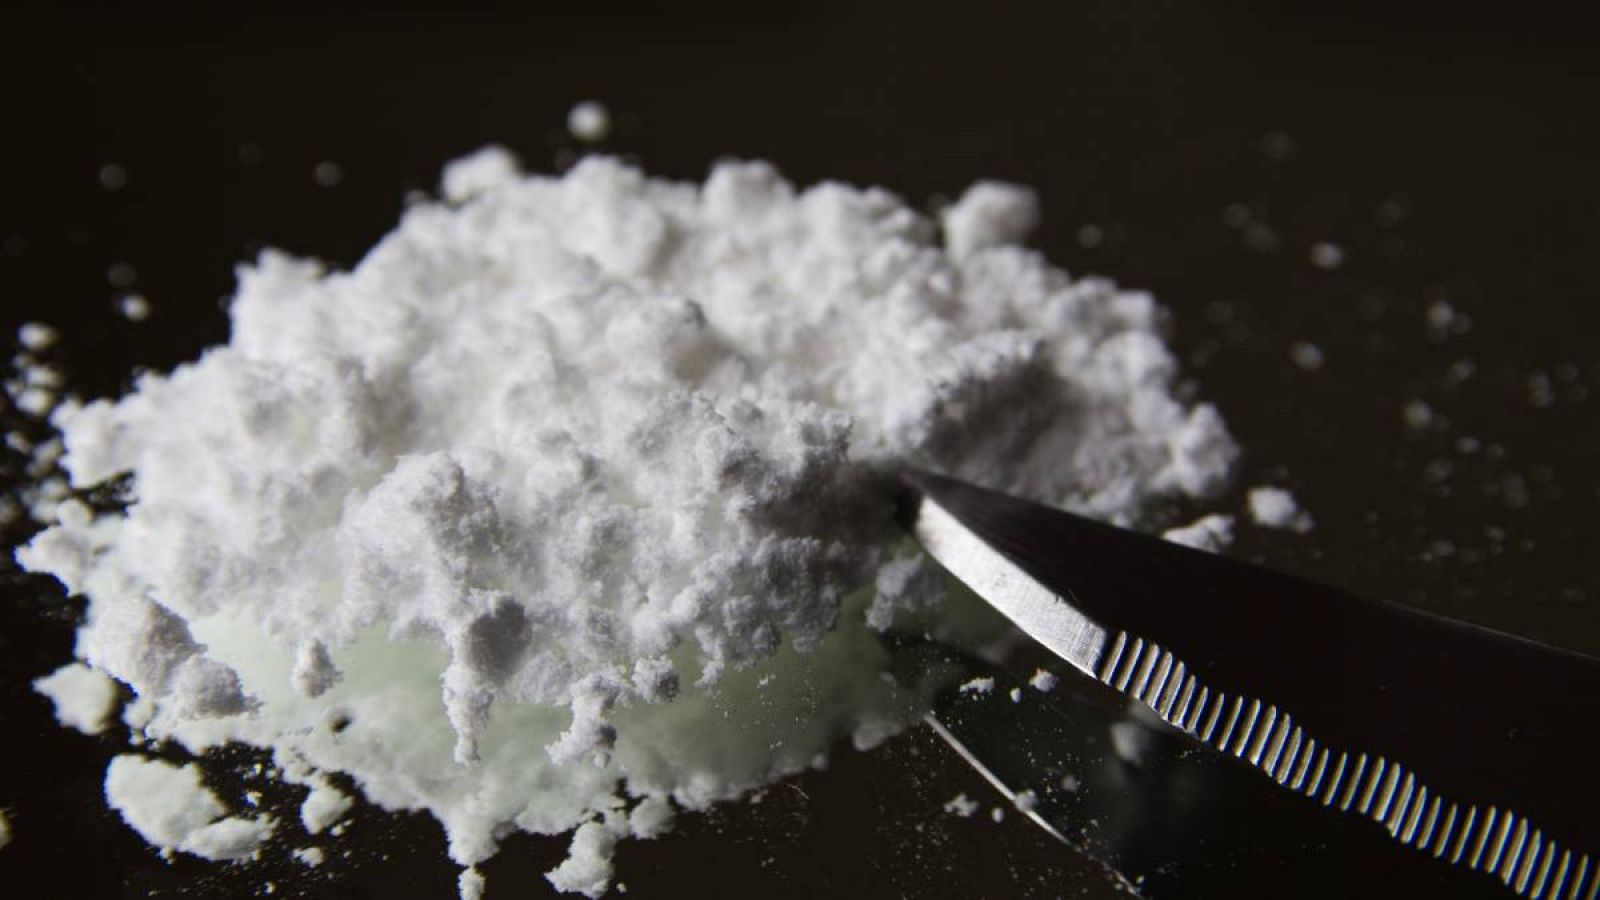 El número de consumidores de drogas creció un 26% en la última década, según la ONU. 